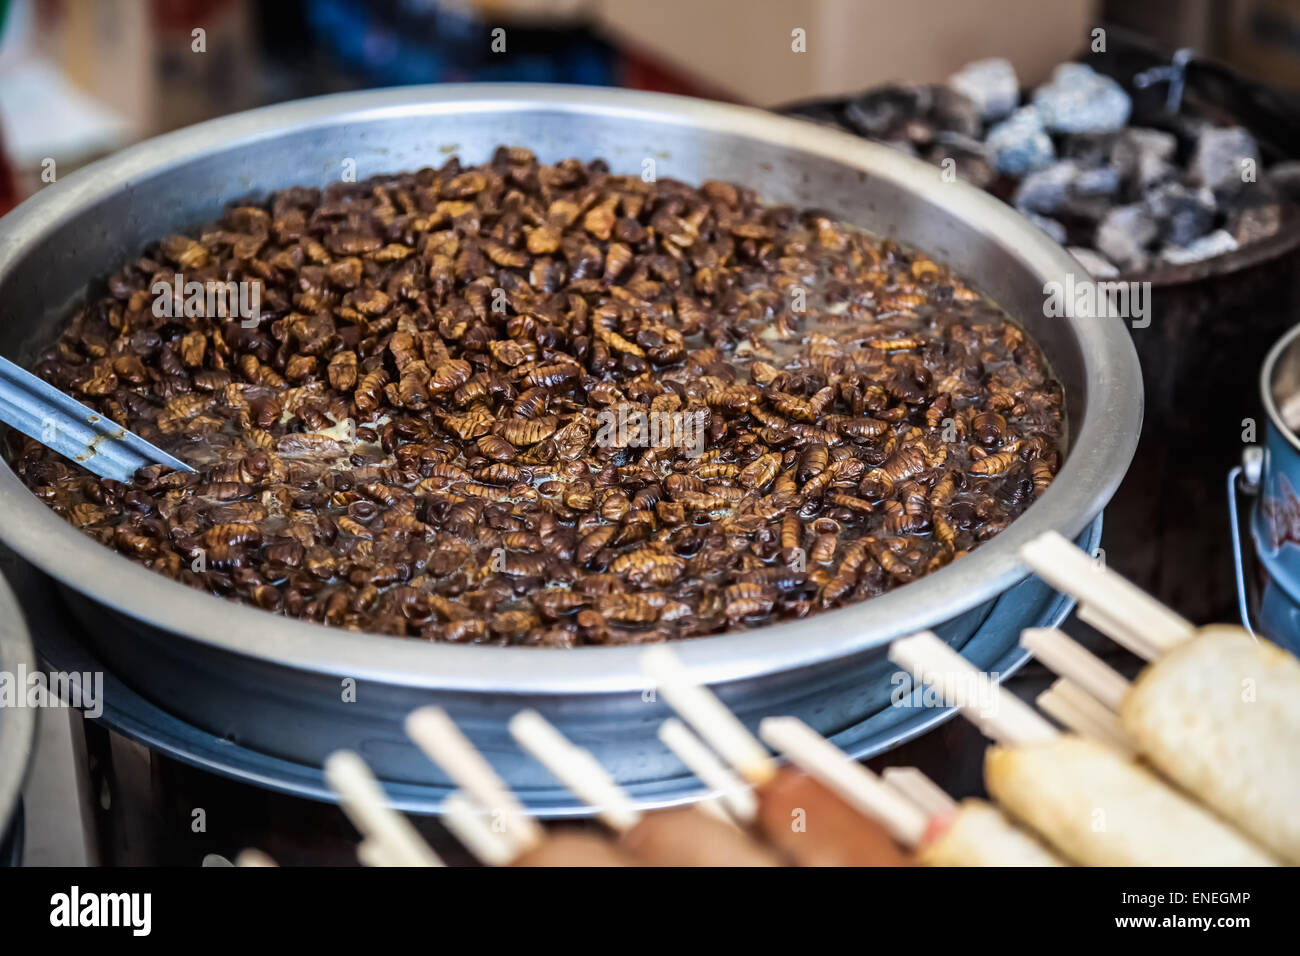 Los escarabajos fritos o insectos exóticos tradicionales coreanas o comida asiática en metal o plato de aluminio o pan Foto de stock